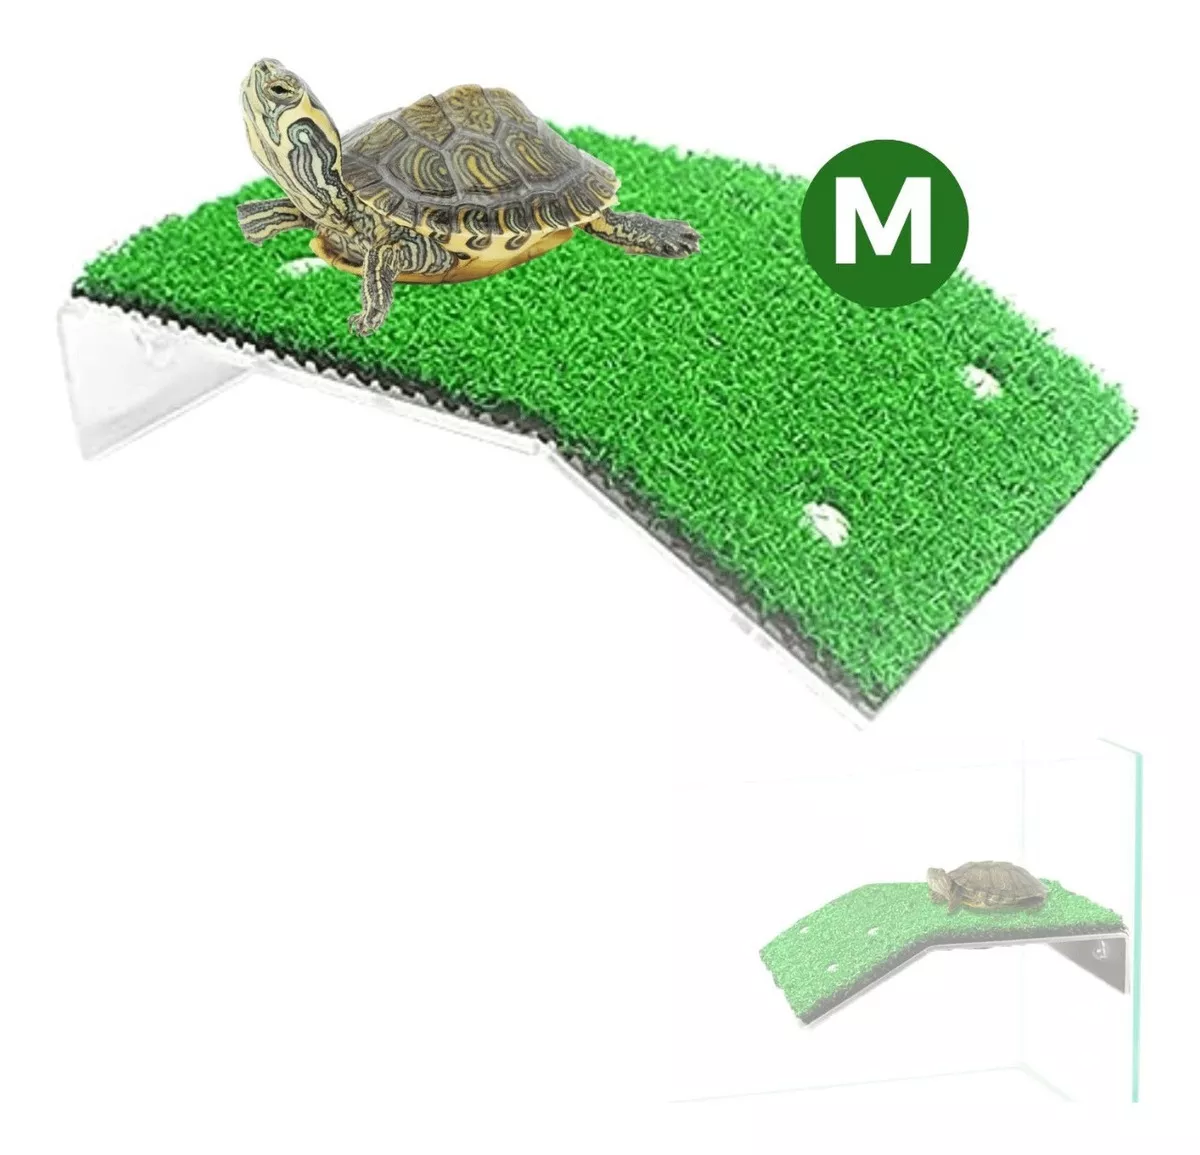 Segunda imagen para búsqueda de terrario tortuga